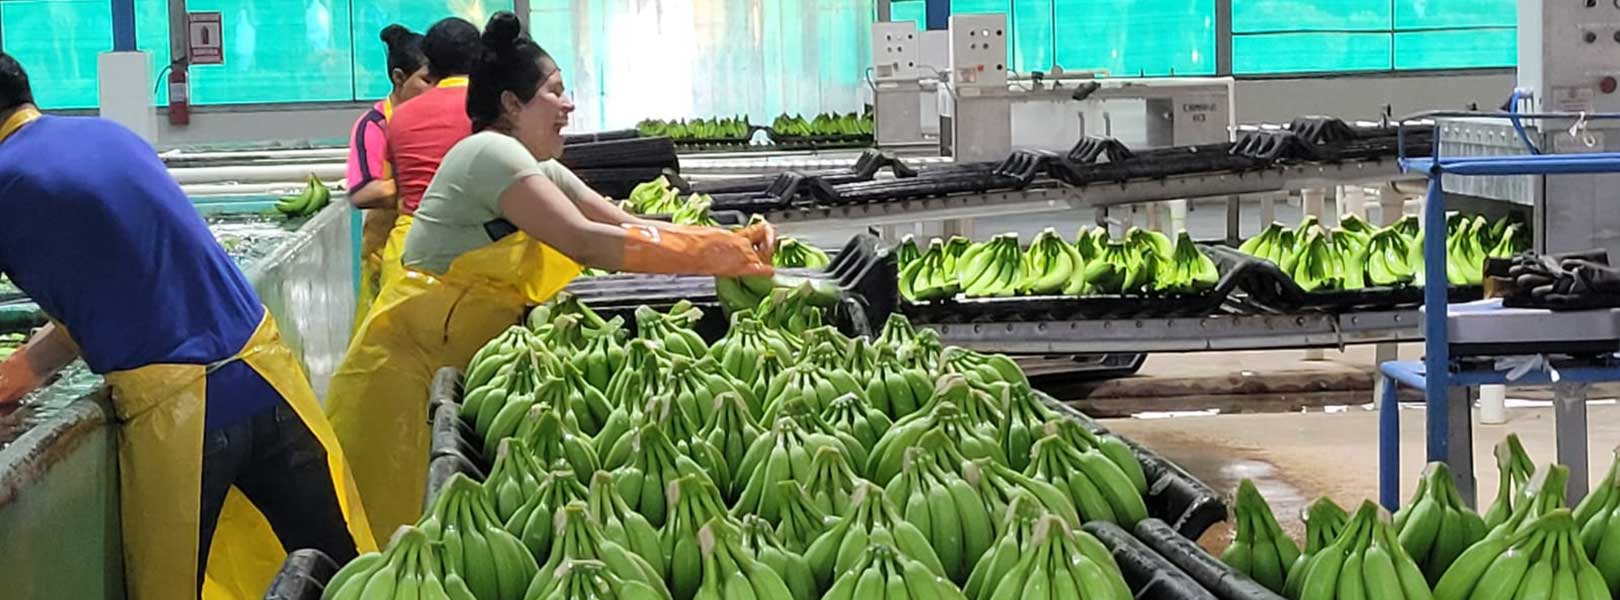 Workers preparing bananas